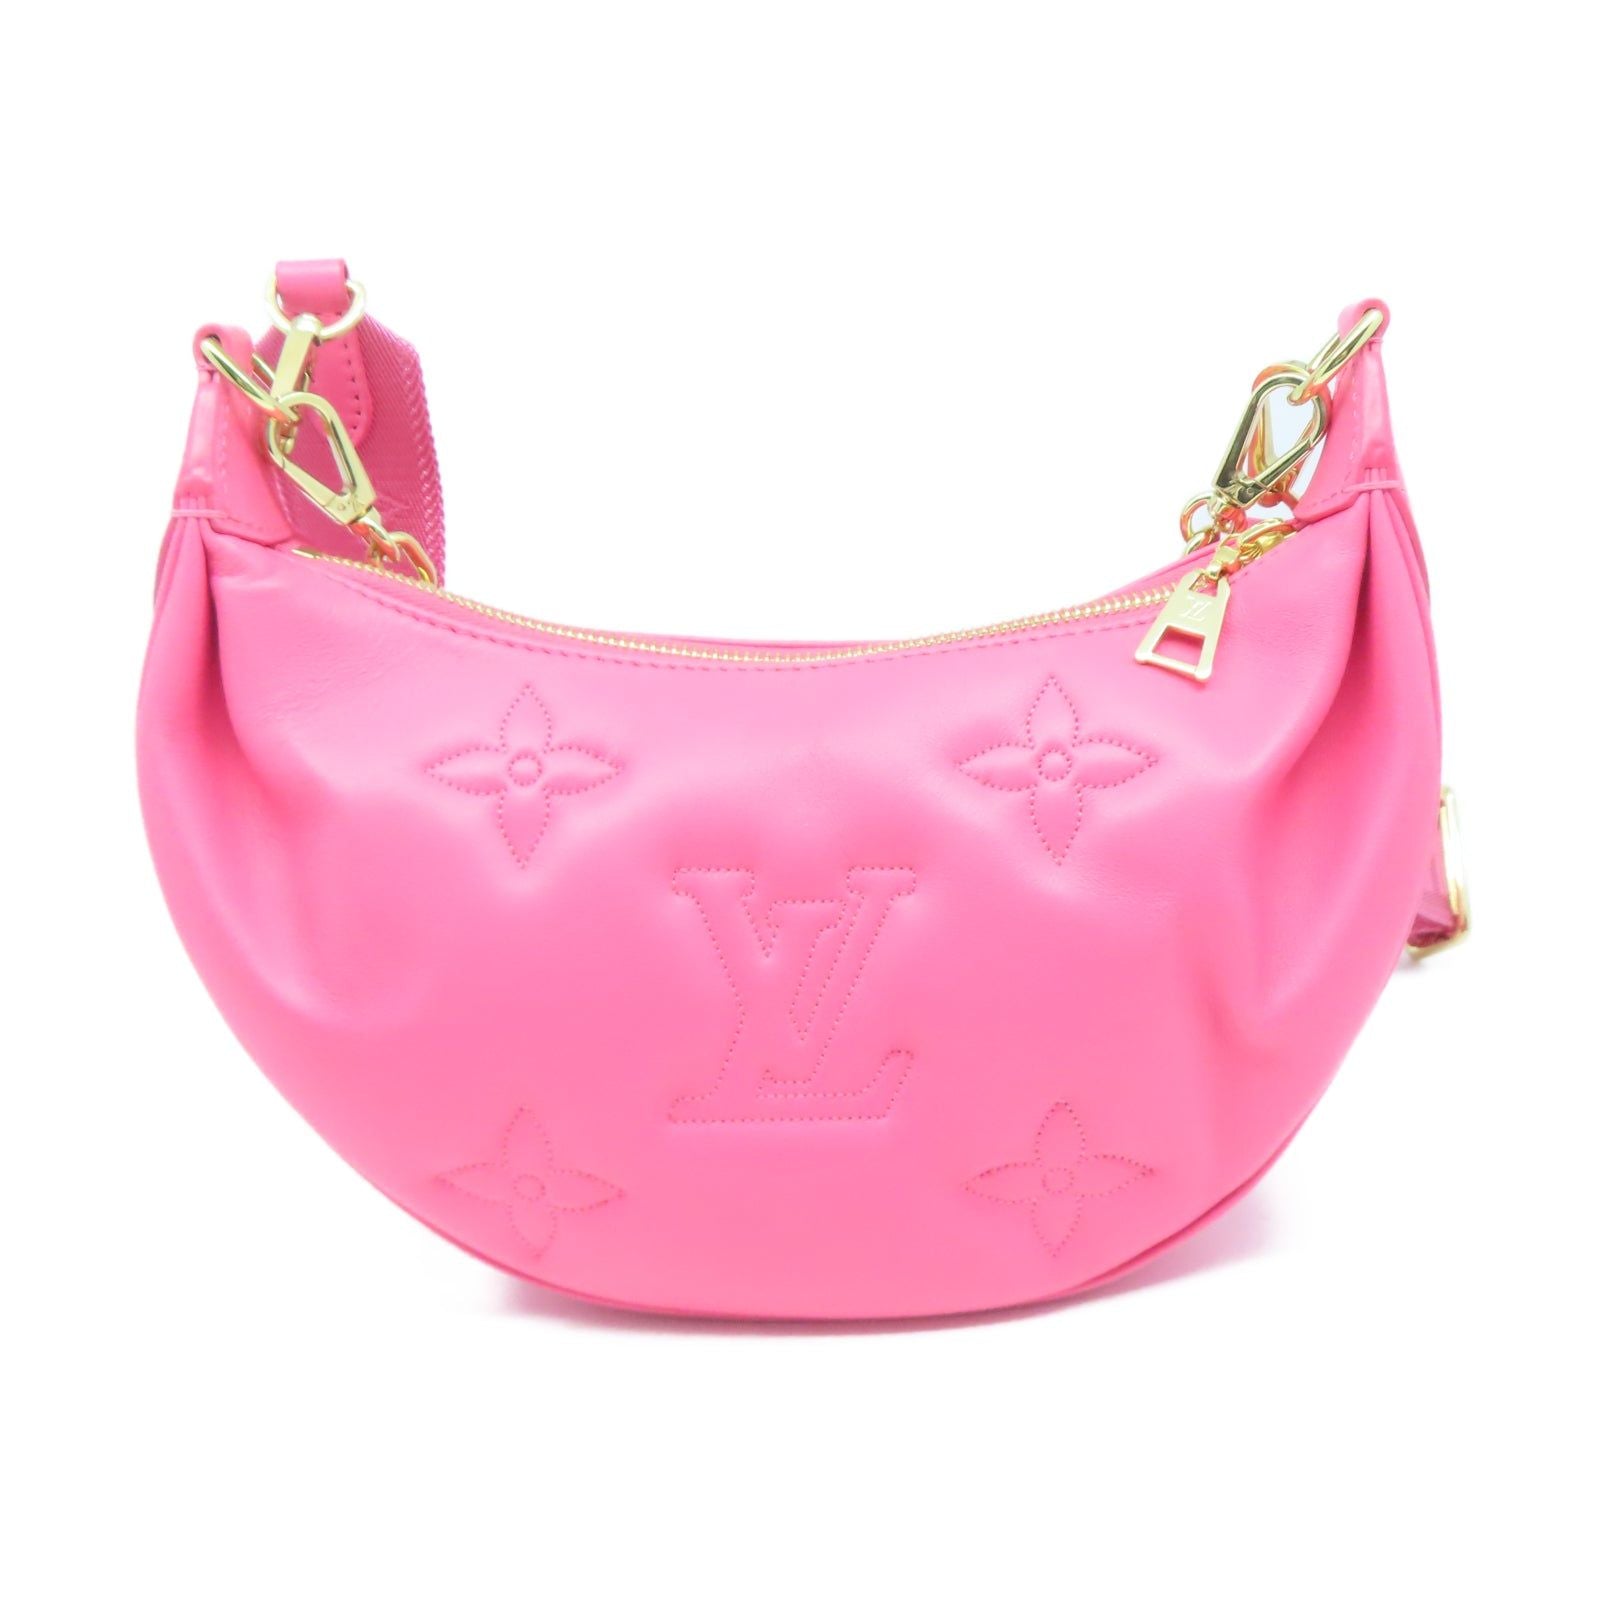 LOUIS VUITTON Louis Vuitton Over The Moon Bubblegram Crossbody/Shoulder Bag in Dragon Fruit (Pink) Monogram - Vault 55